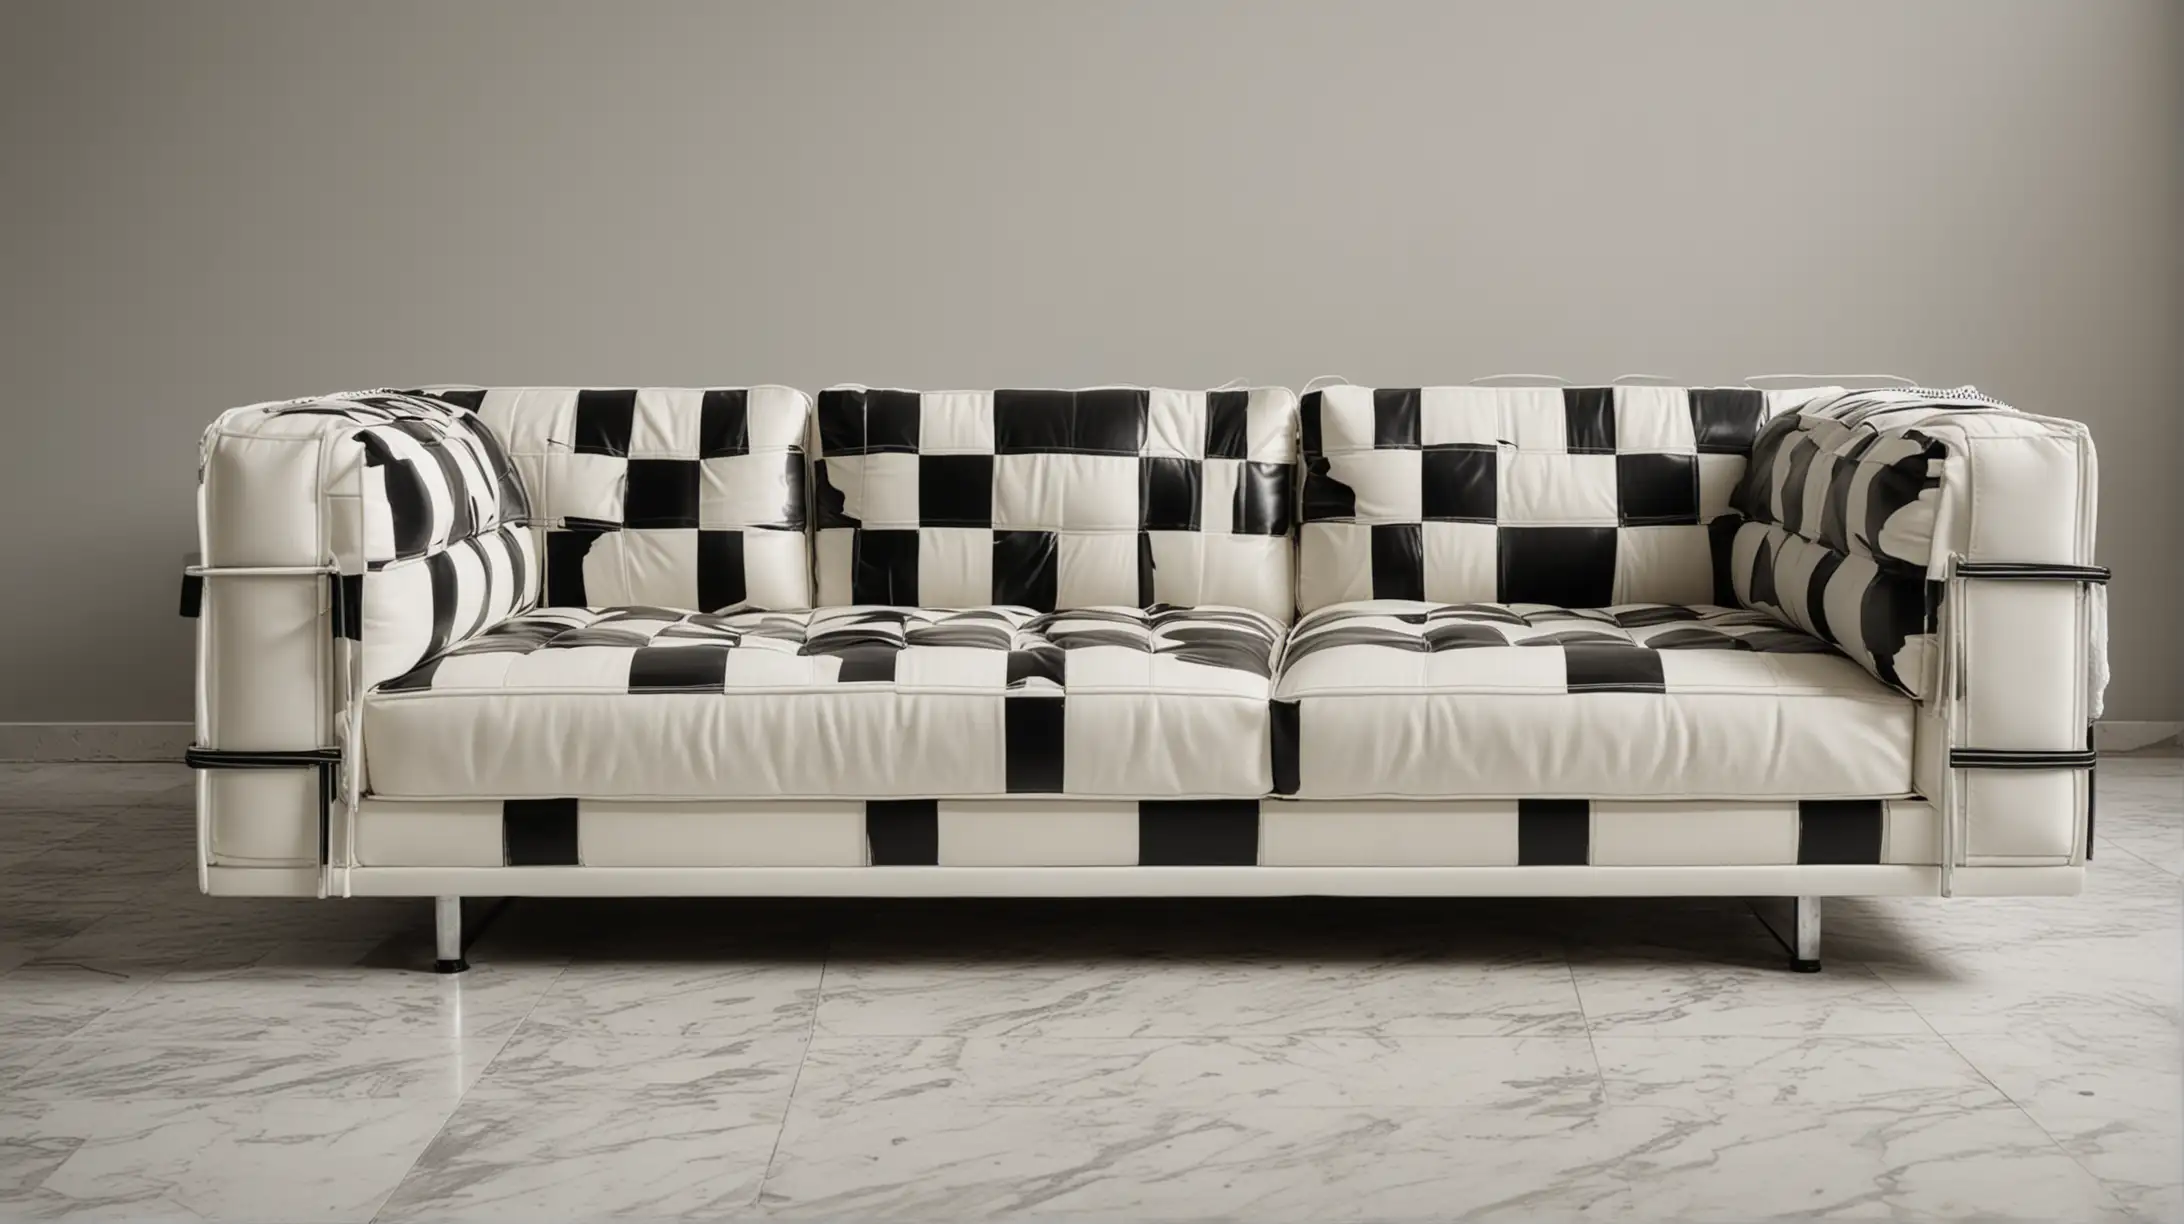 Frontal Bauhaus Sofa in Checkered Flag Design on White Marble Floor